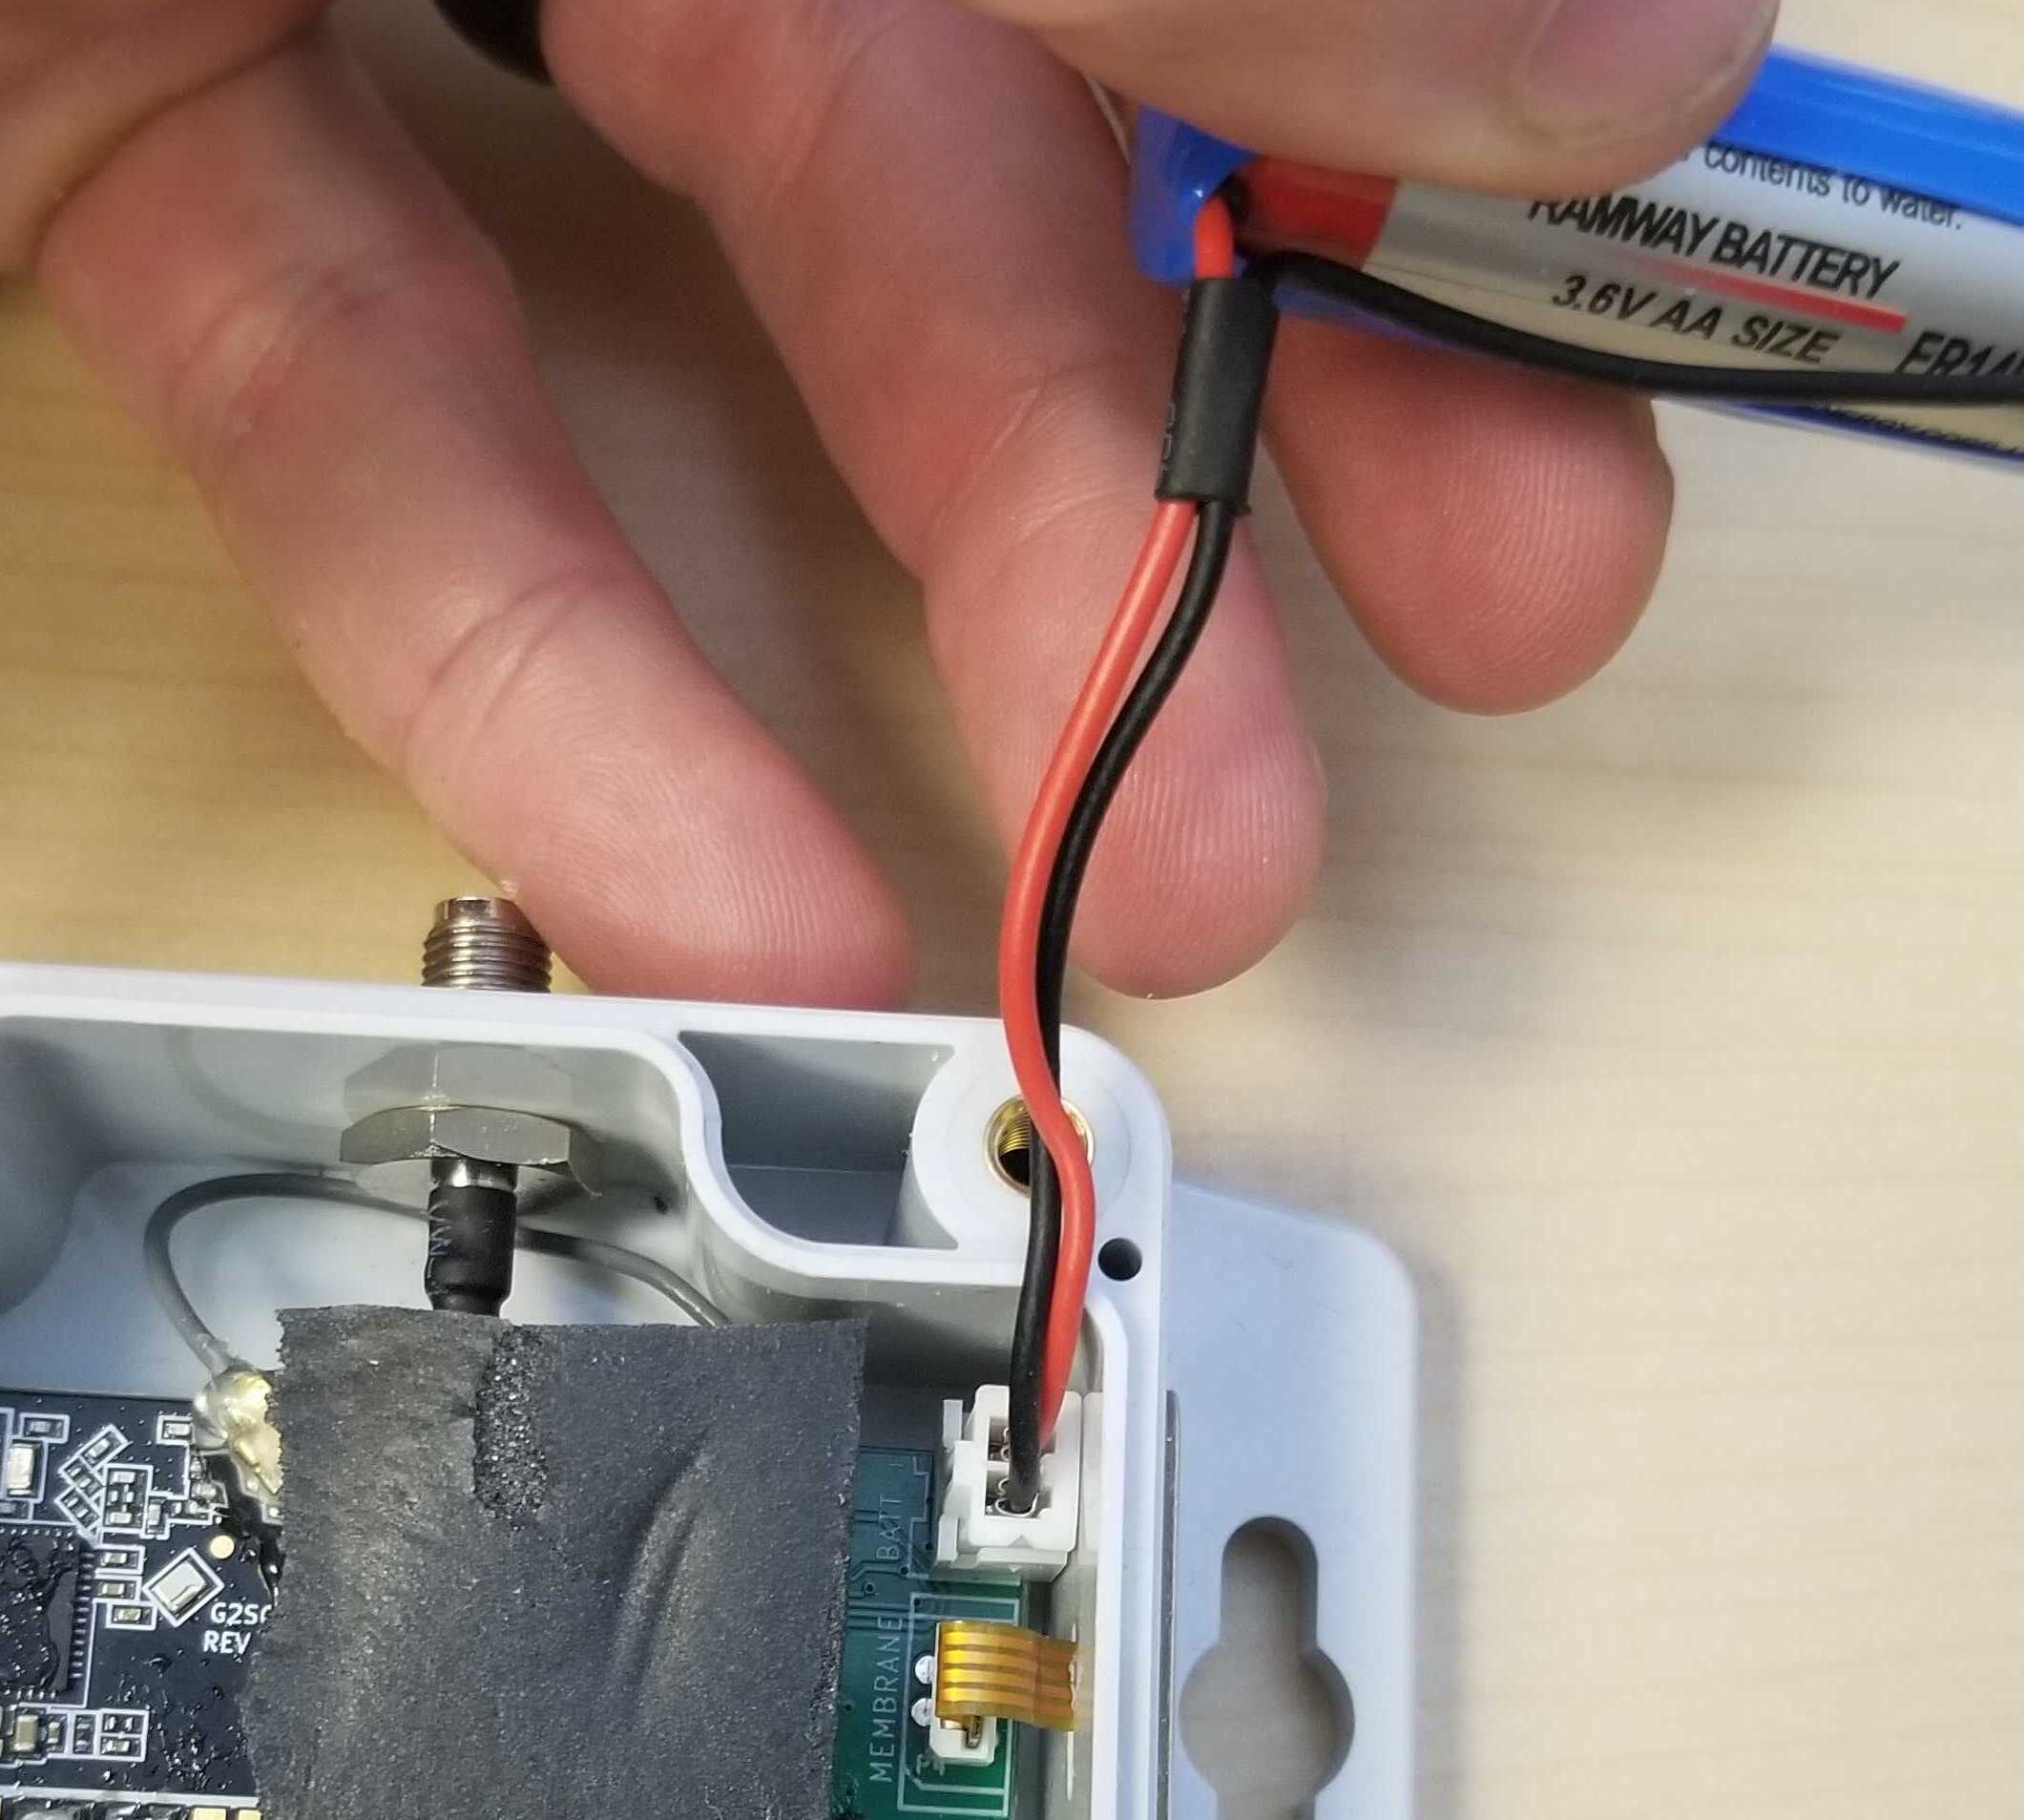 Sensor - Retrieve Industrial Battery